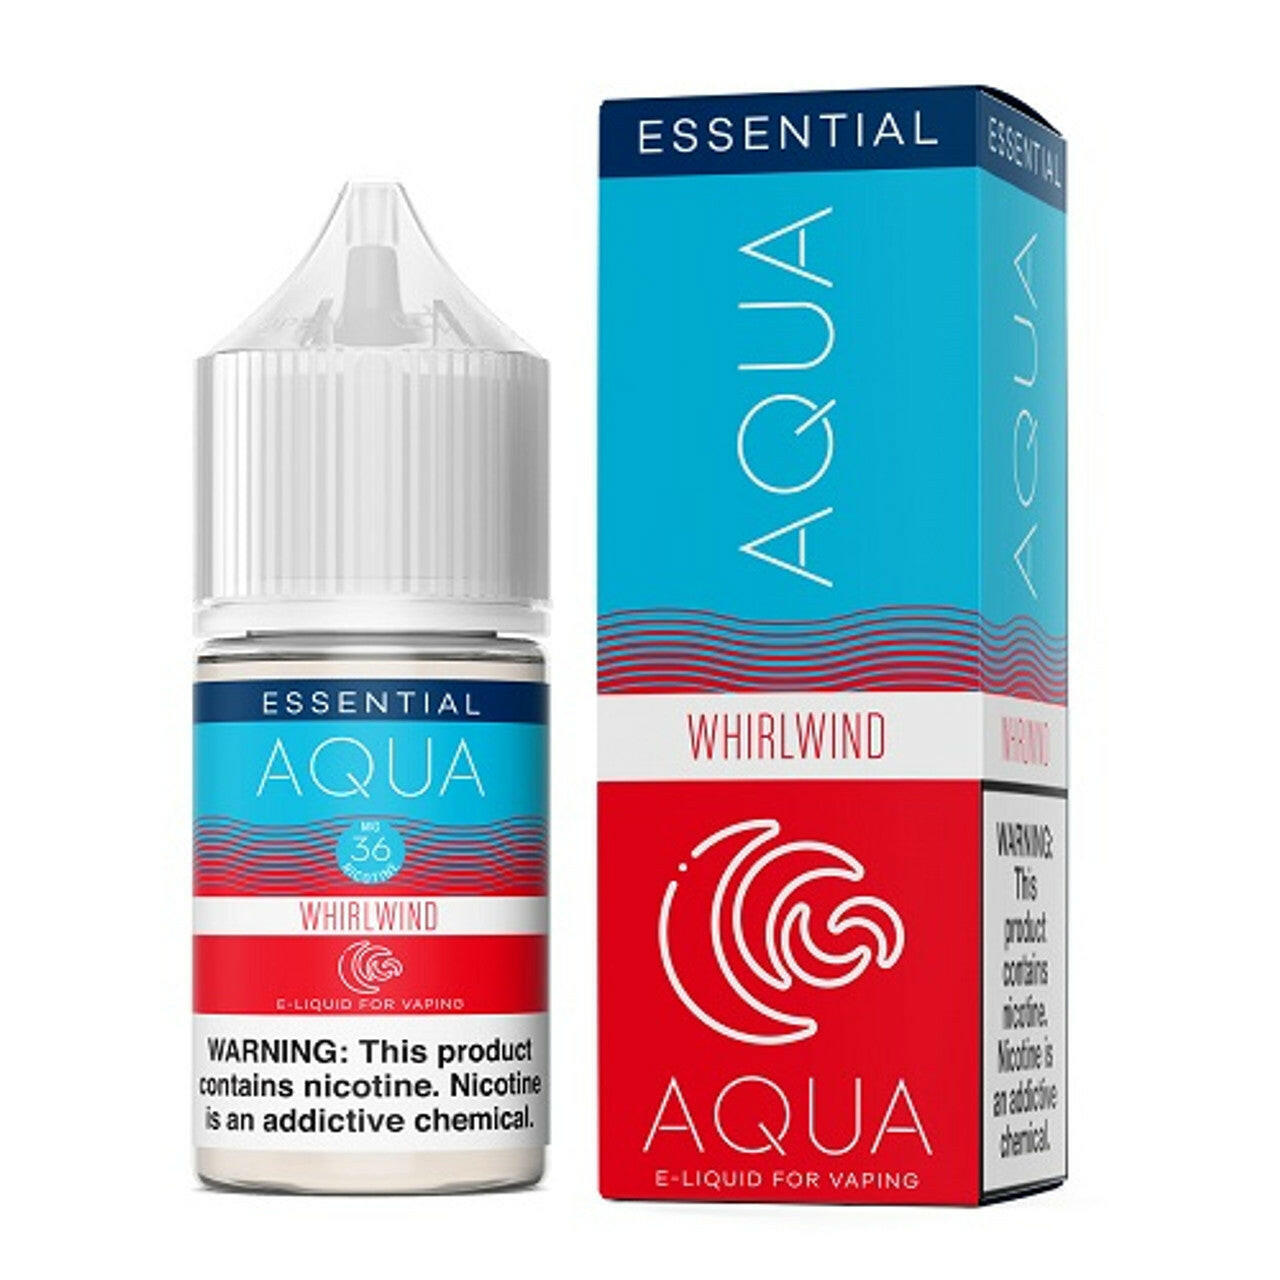 Aqua Essential Nicotine Salt E-Liquid By Marina Vape 30ML Whirlwind